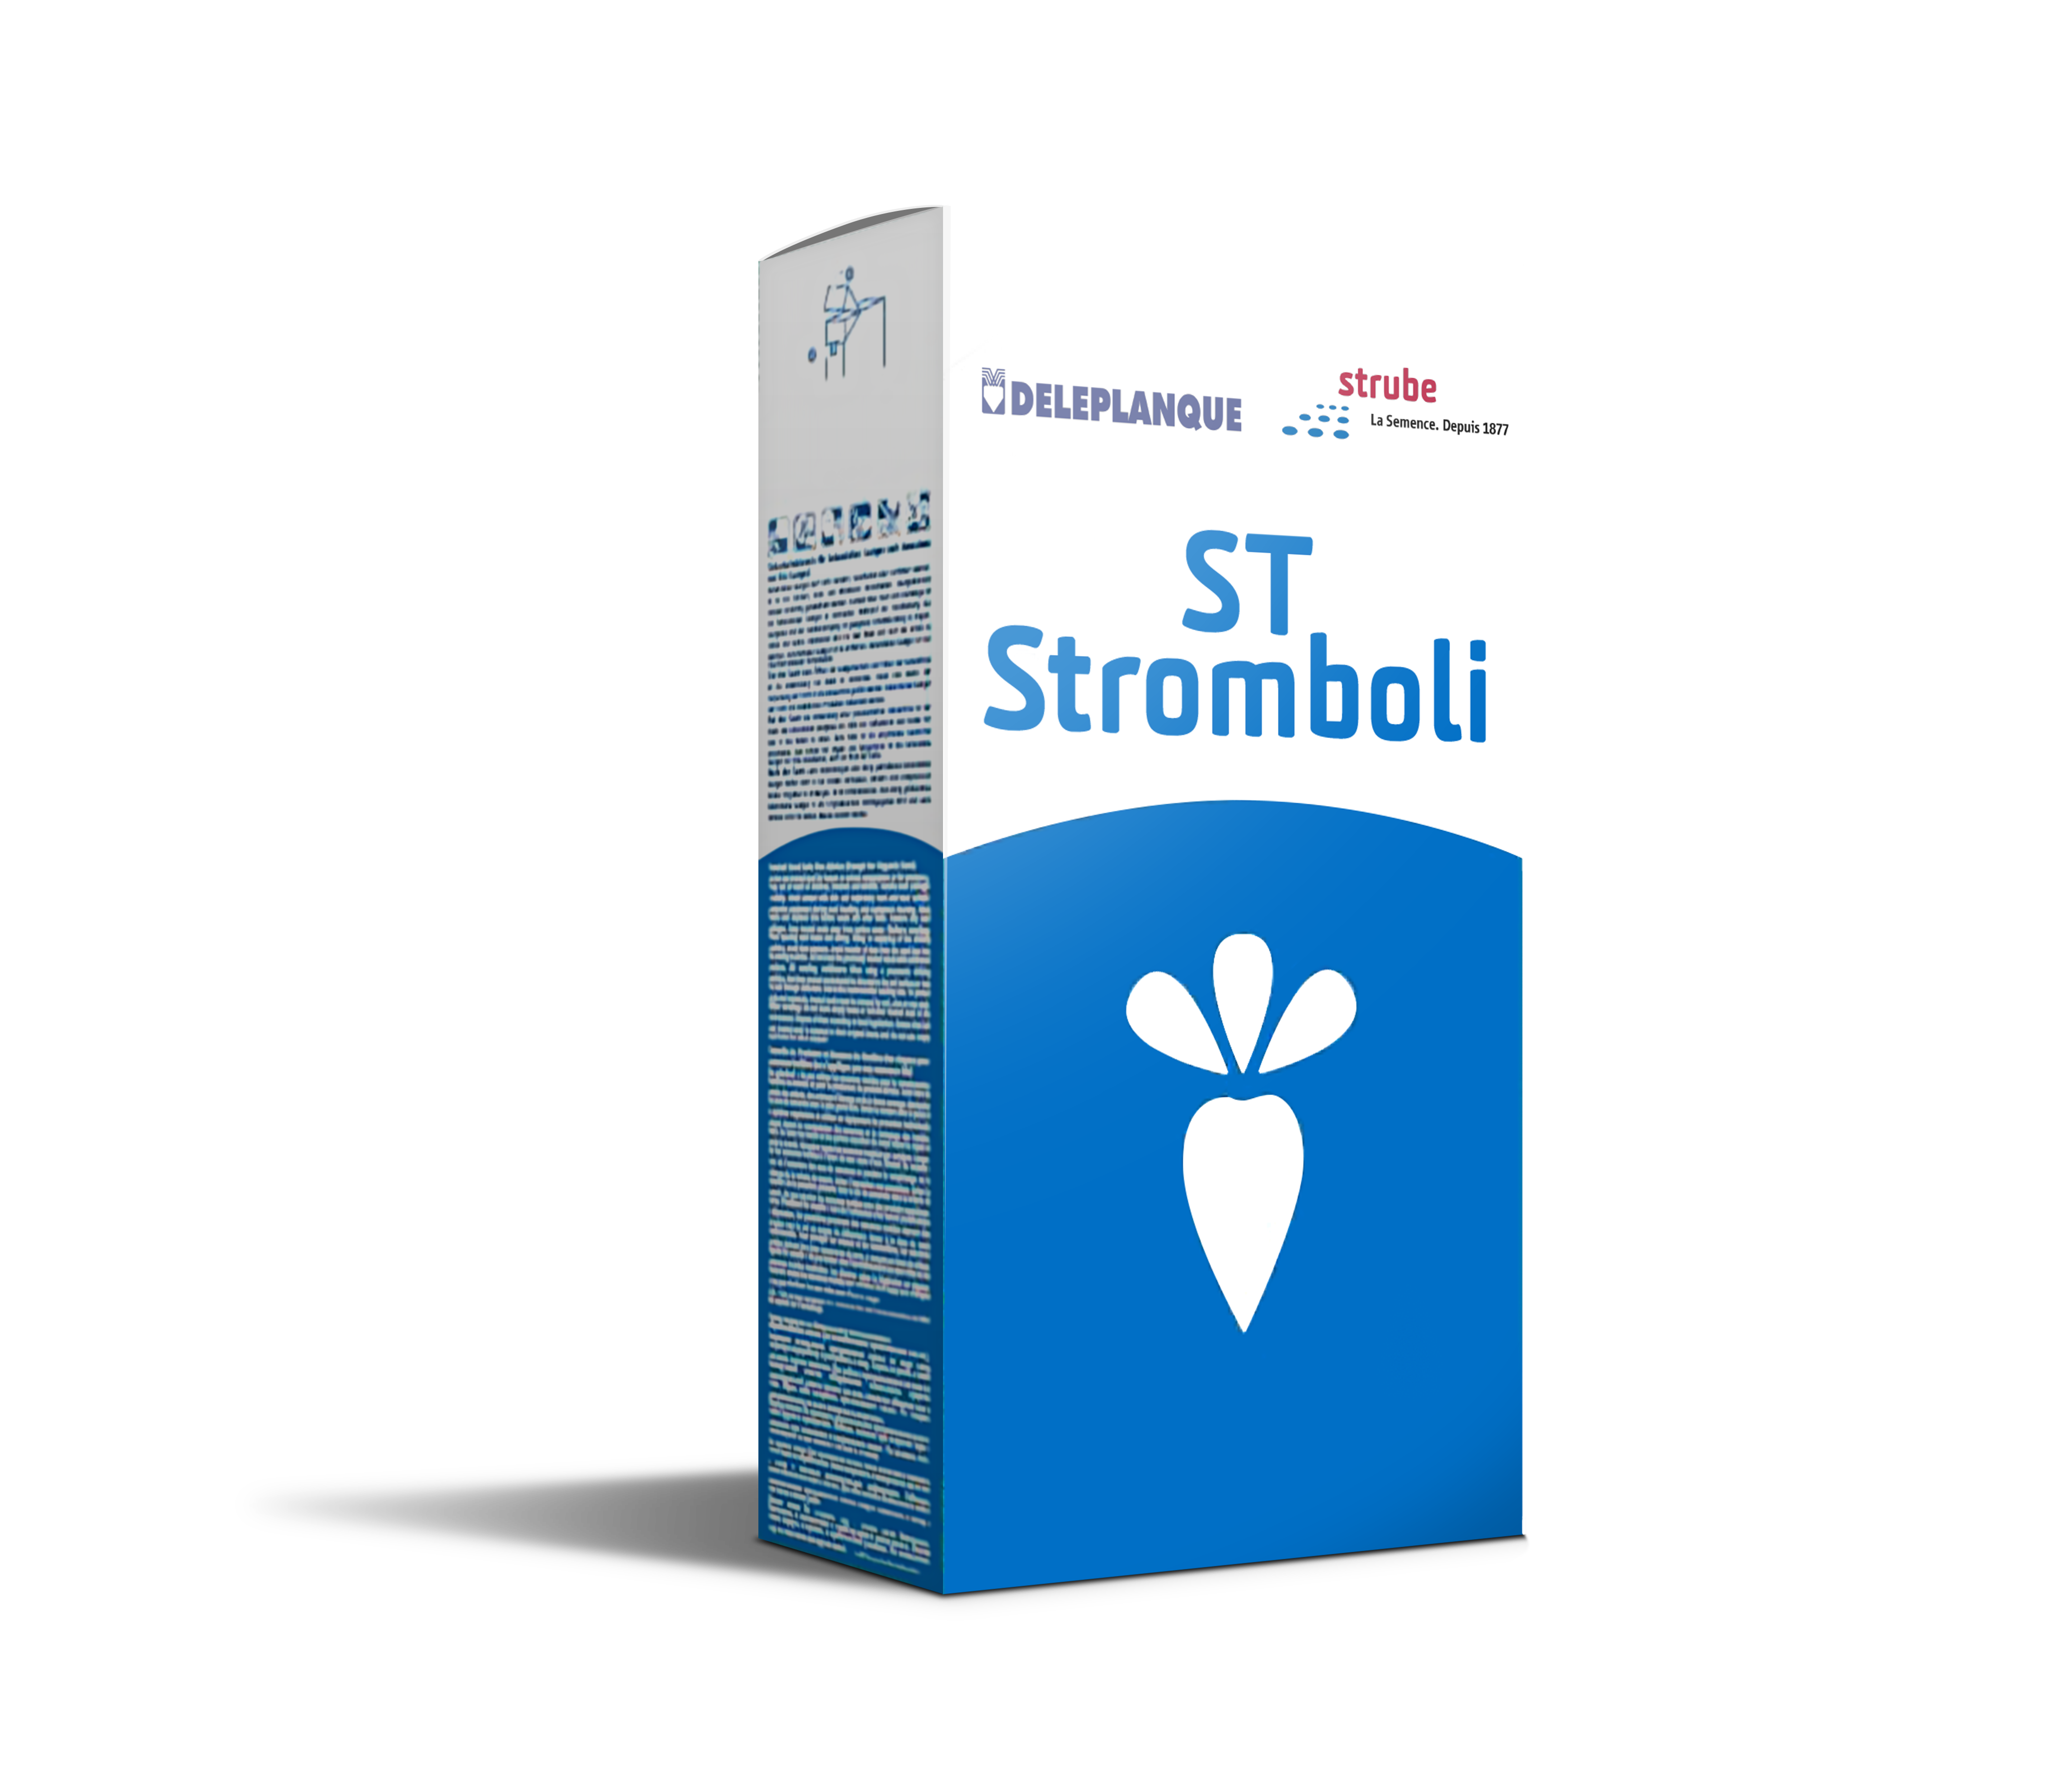 Visuel variété ST Stromboli